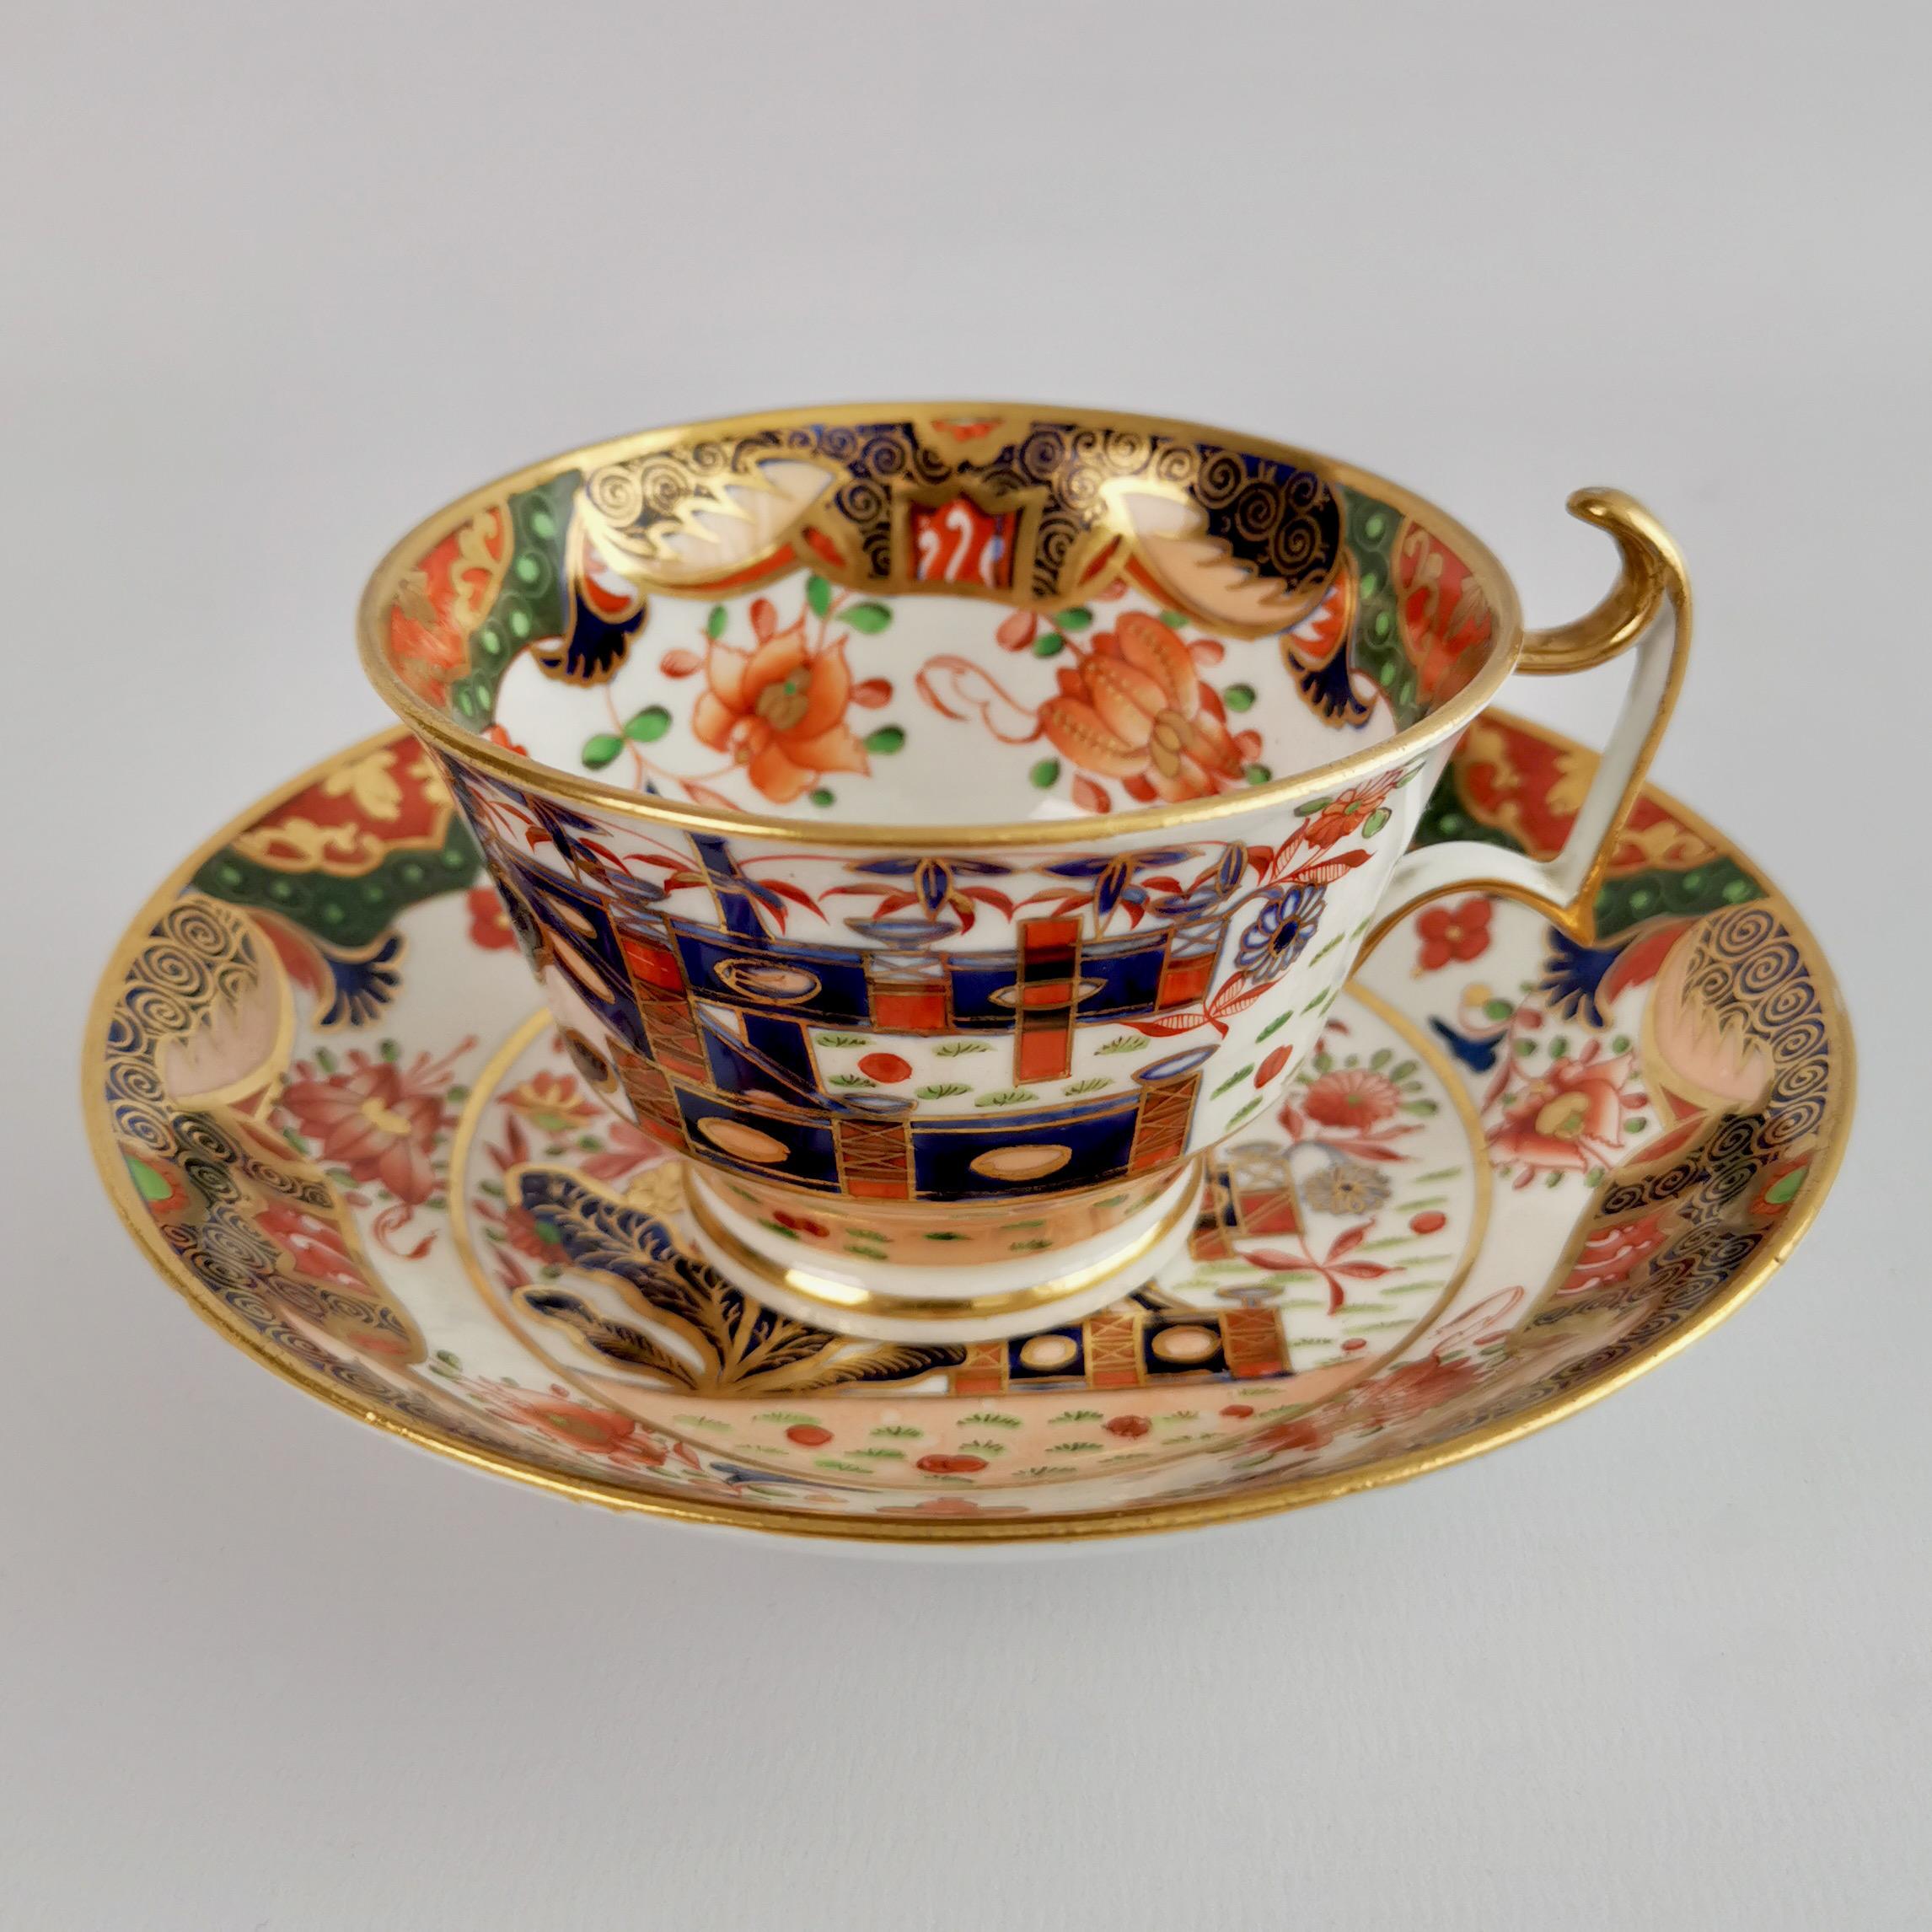 English Porcelain Teacup Trio, Spode Imari Tobacco Leaf Patt. 967, Regency ca 1815